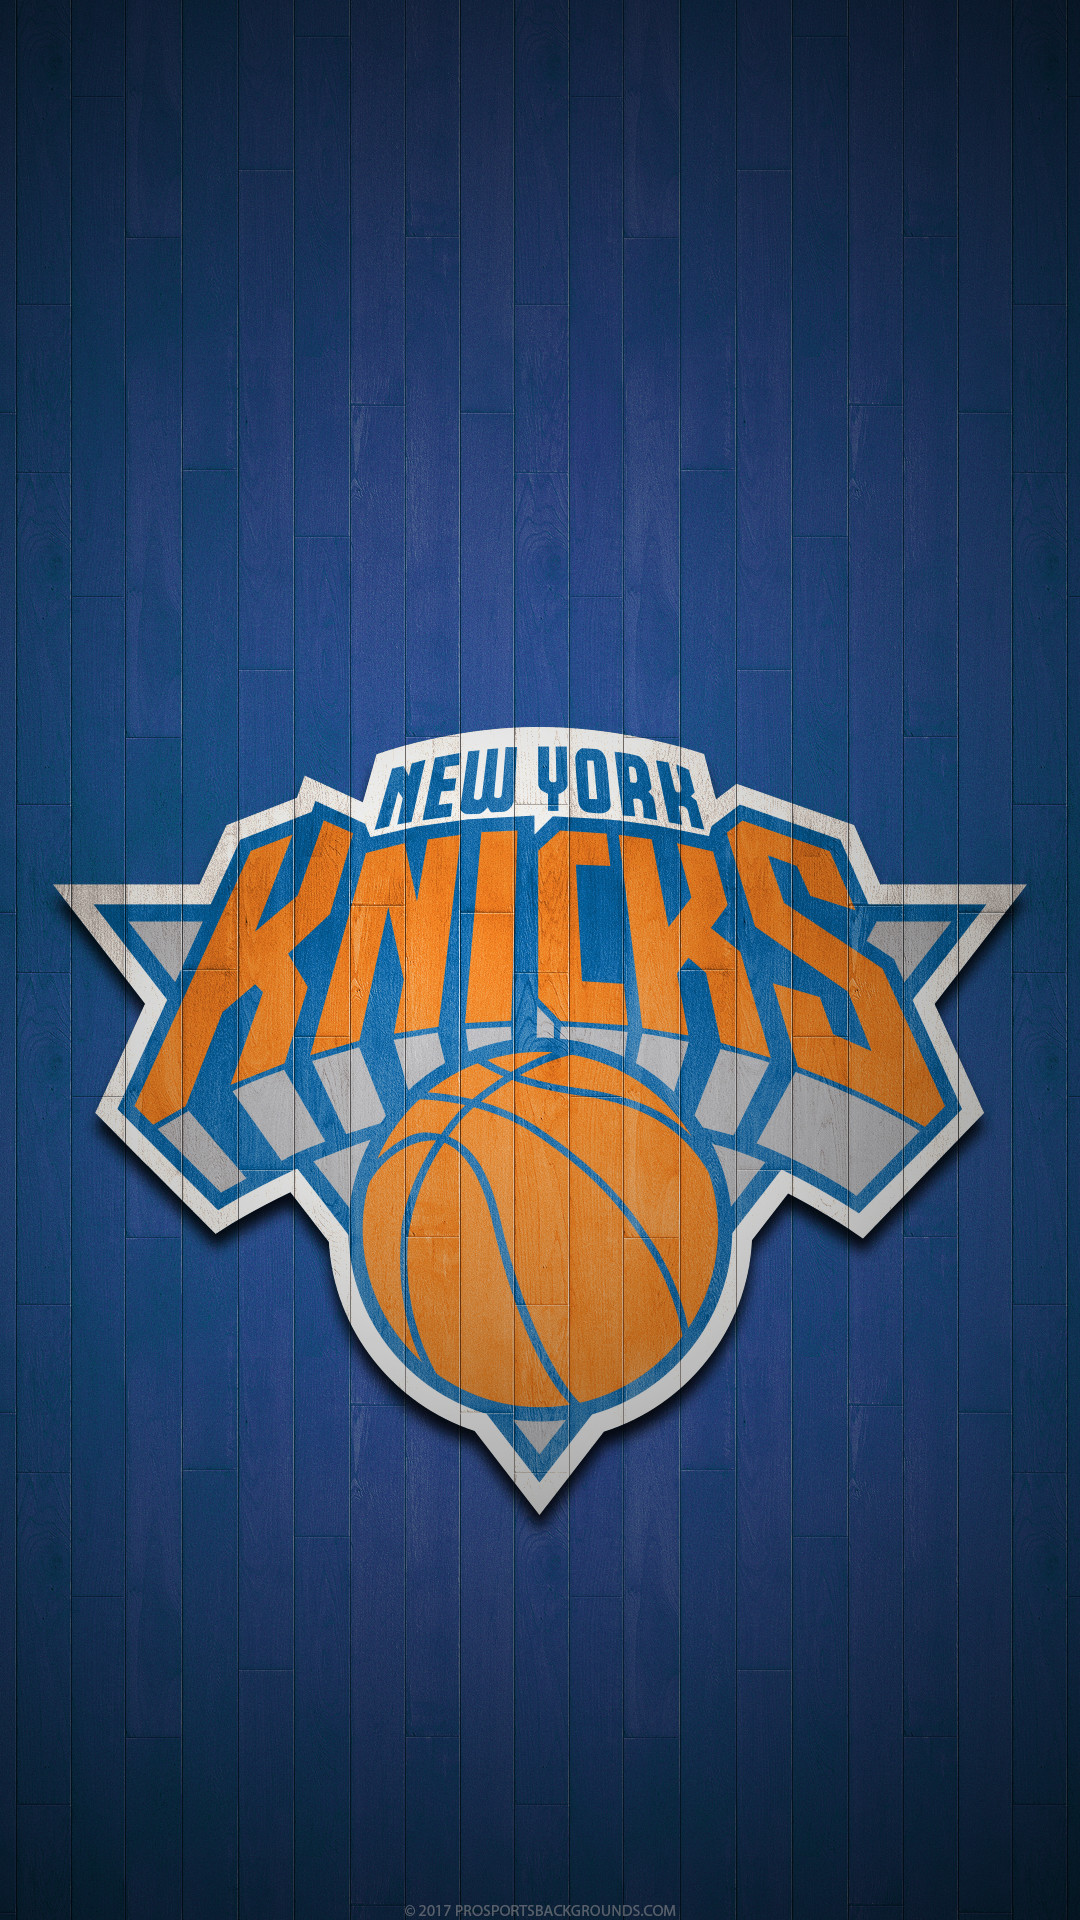 1080x1920  New York Knicks 2017 nba basketball hardwood team logo wallpaper  for iphone andriod and windows mobile .